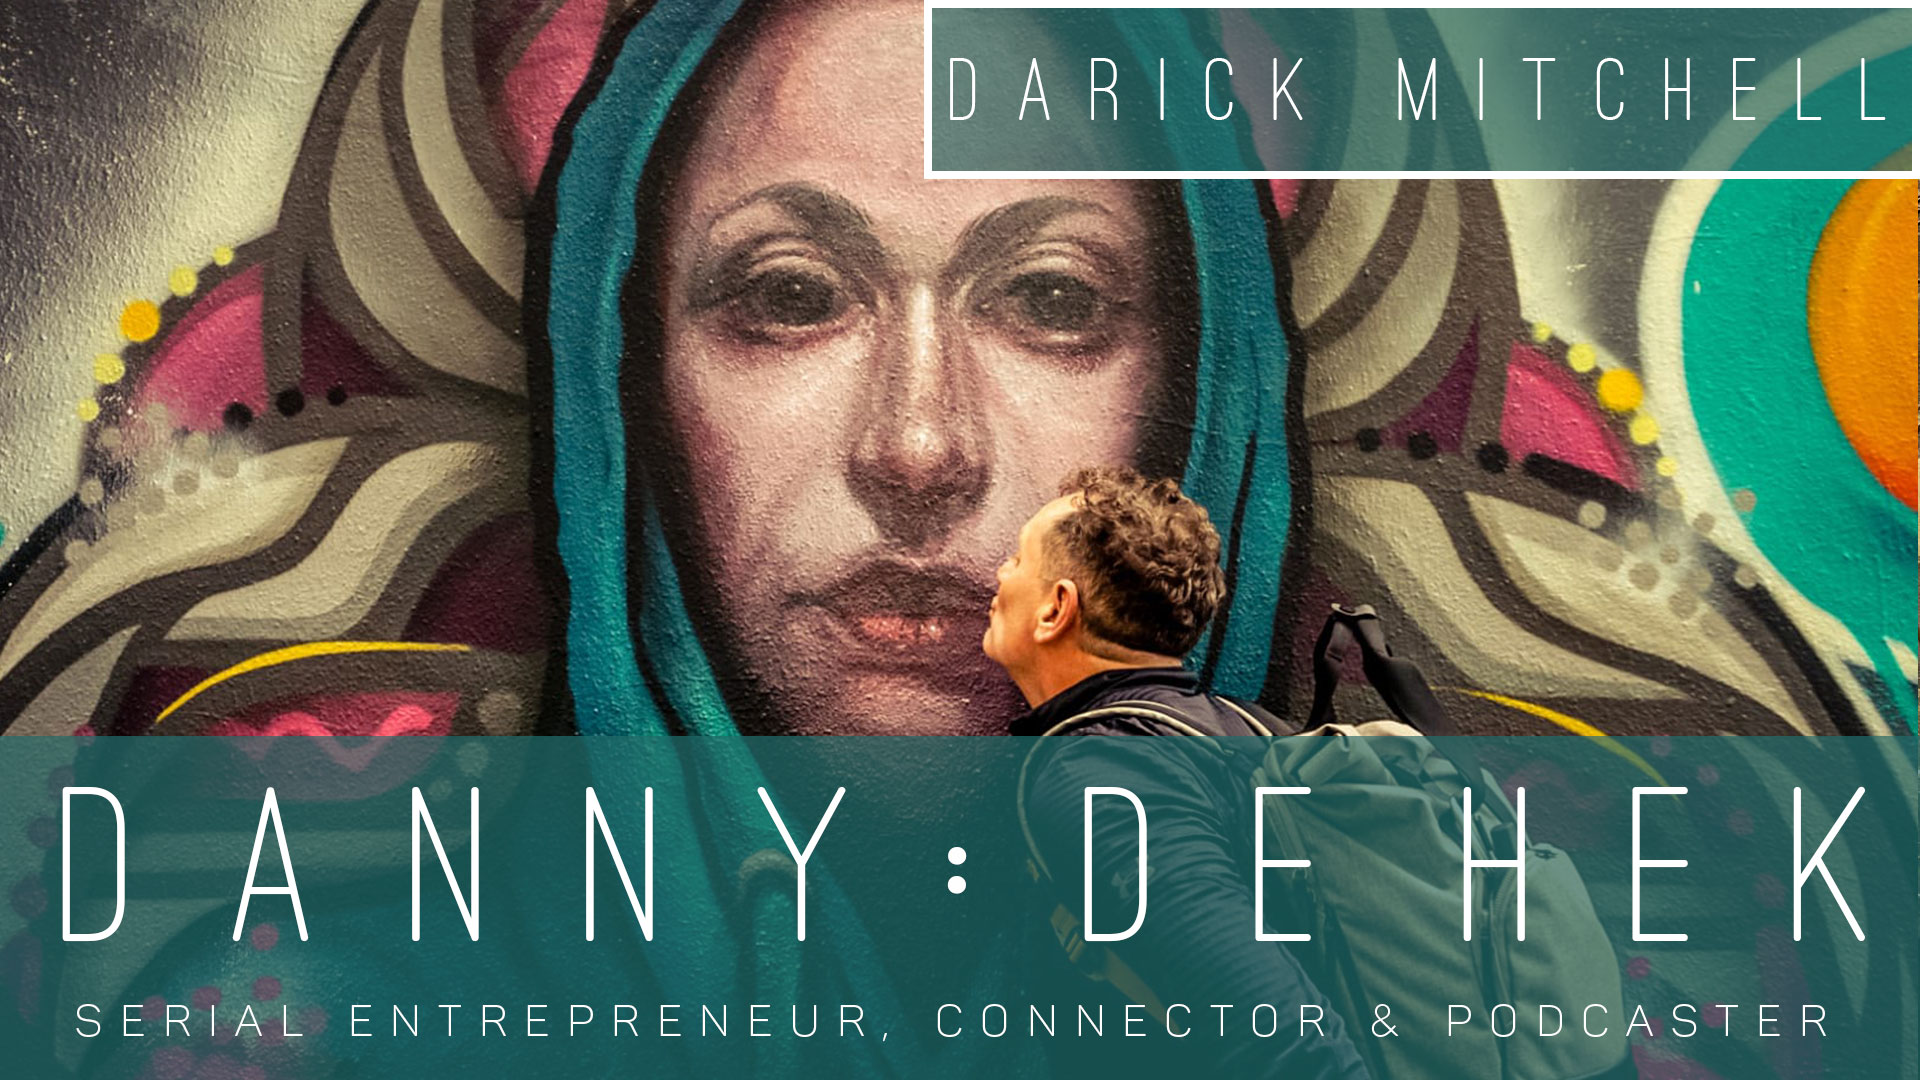 What de Hek 12 Questions Darick Mitchellnbsp› Entrepreneur Decision Maker Connector Podcaster Educator